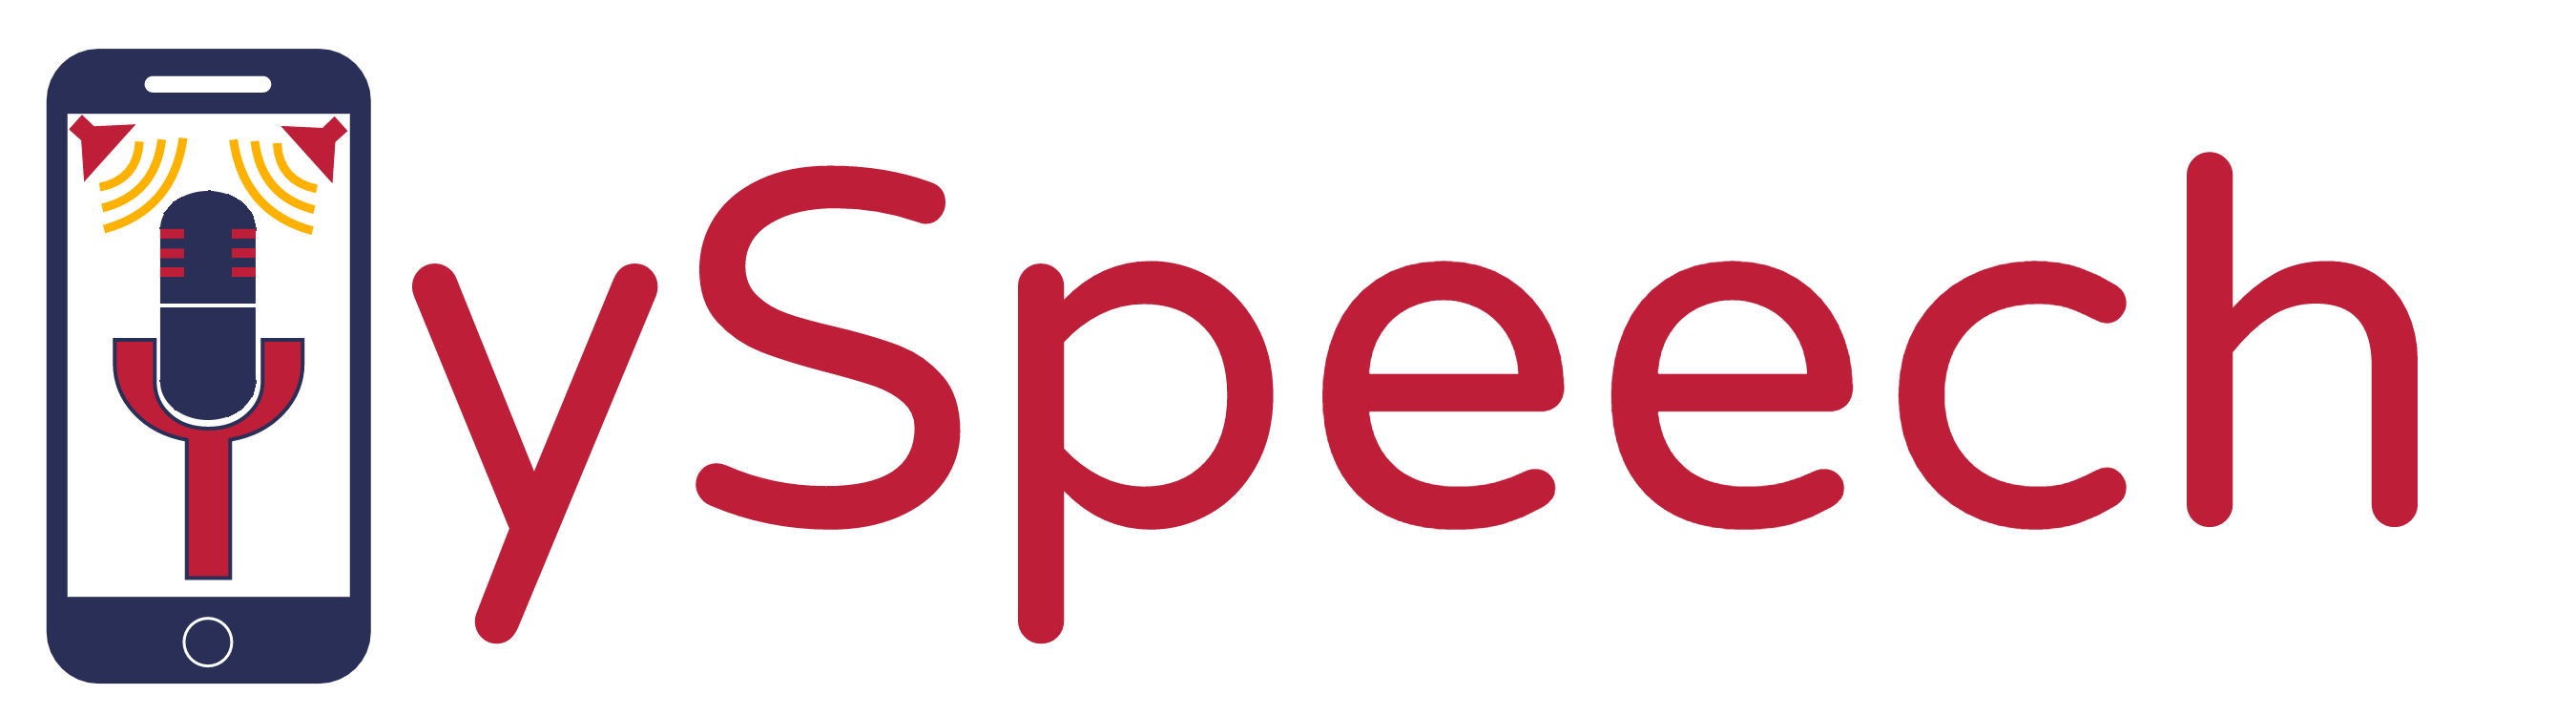 ySpeech Logo